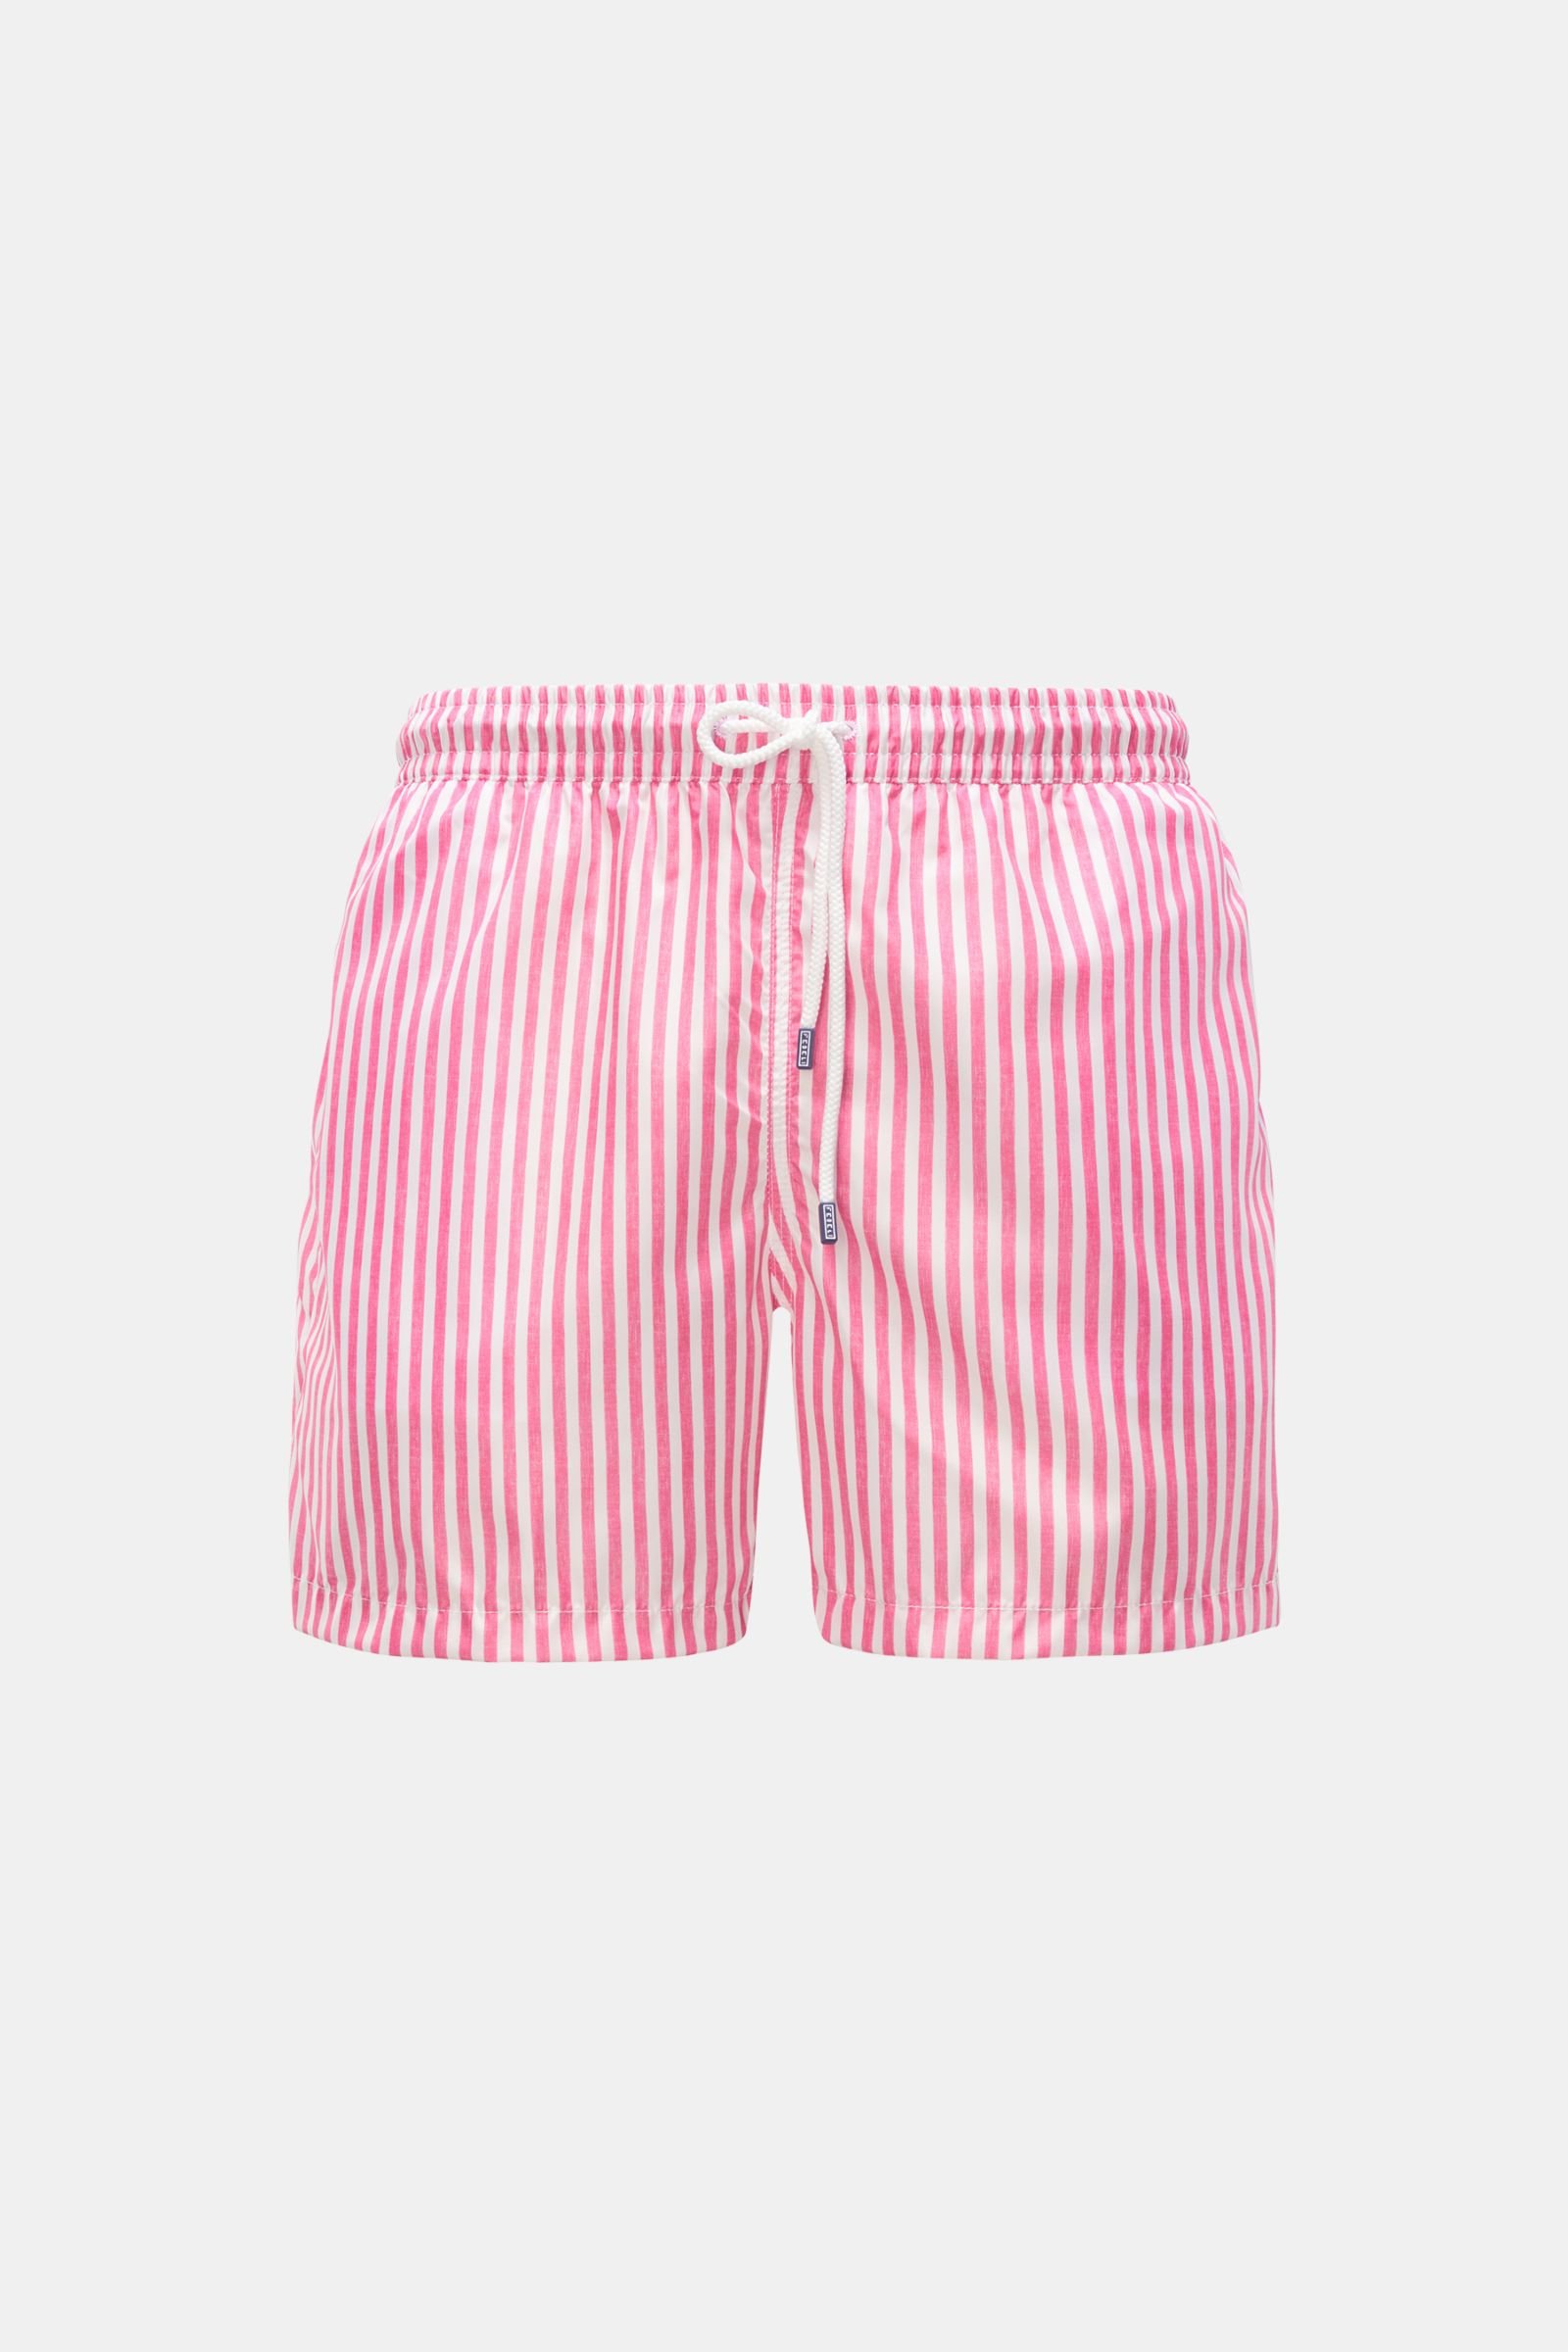 Swim shorts 'Madeira Airstop' rose/white striped